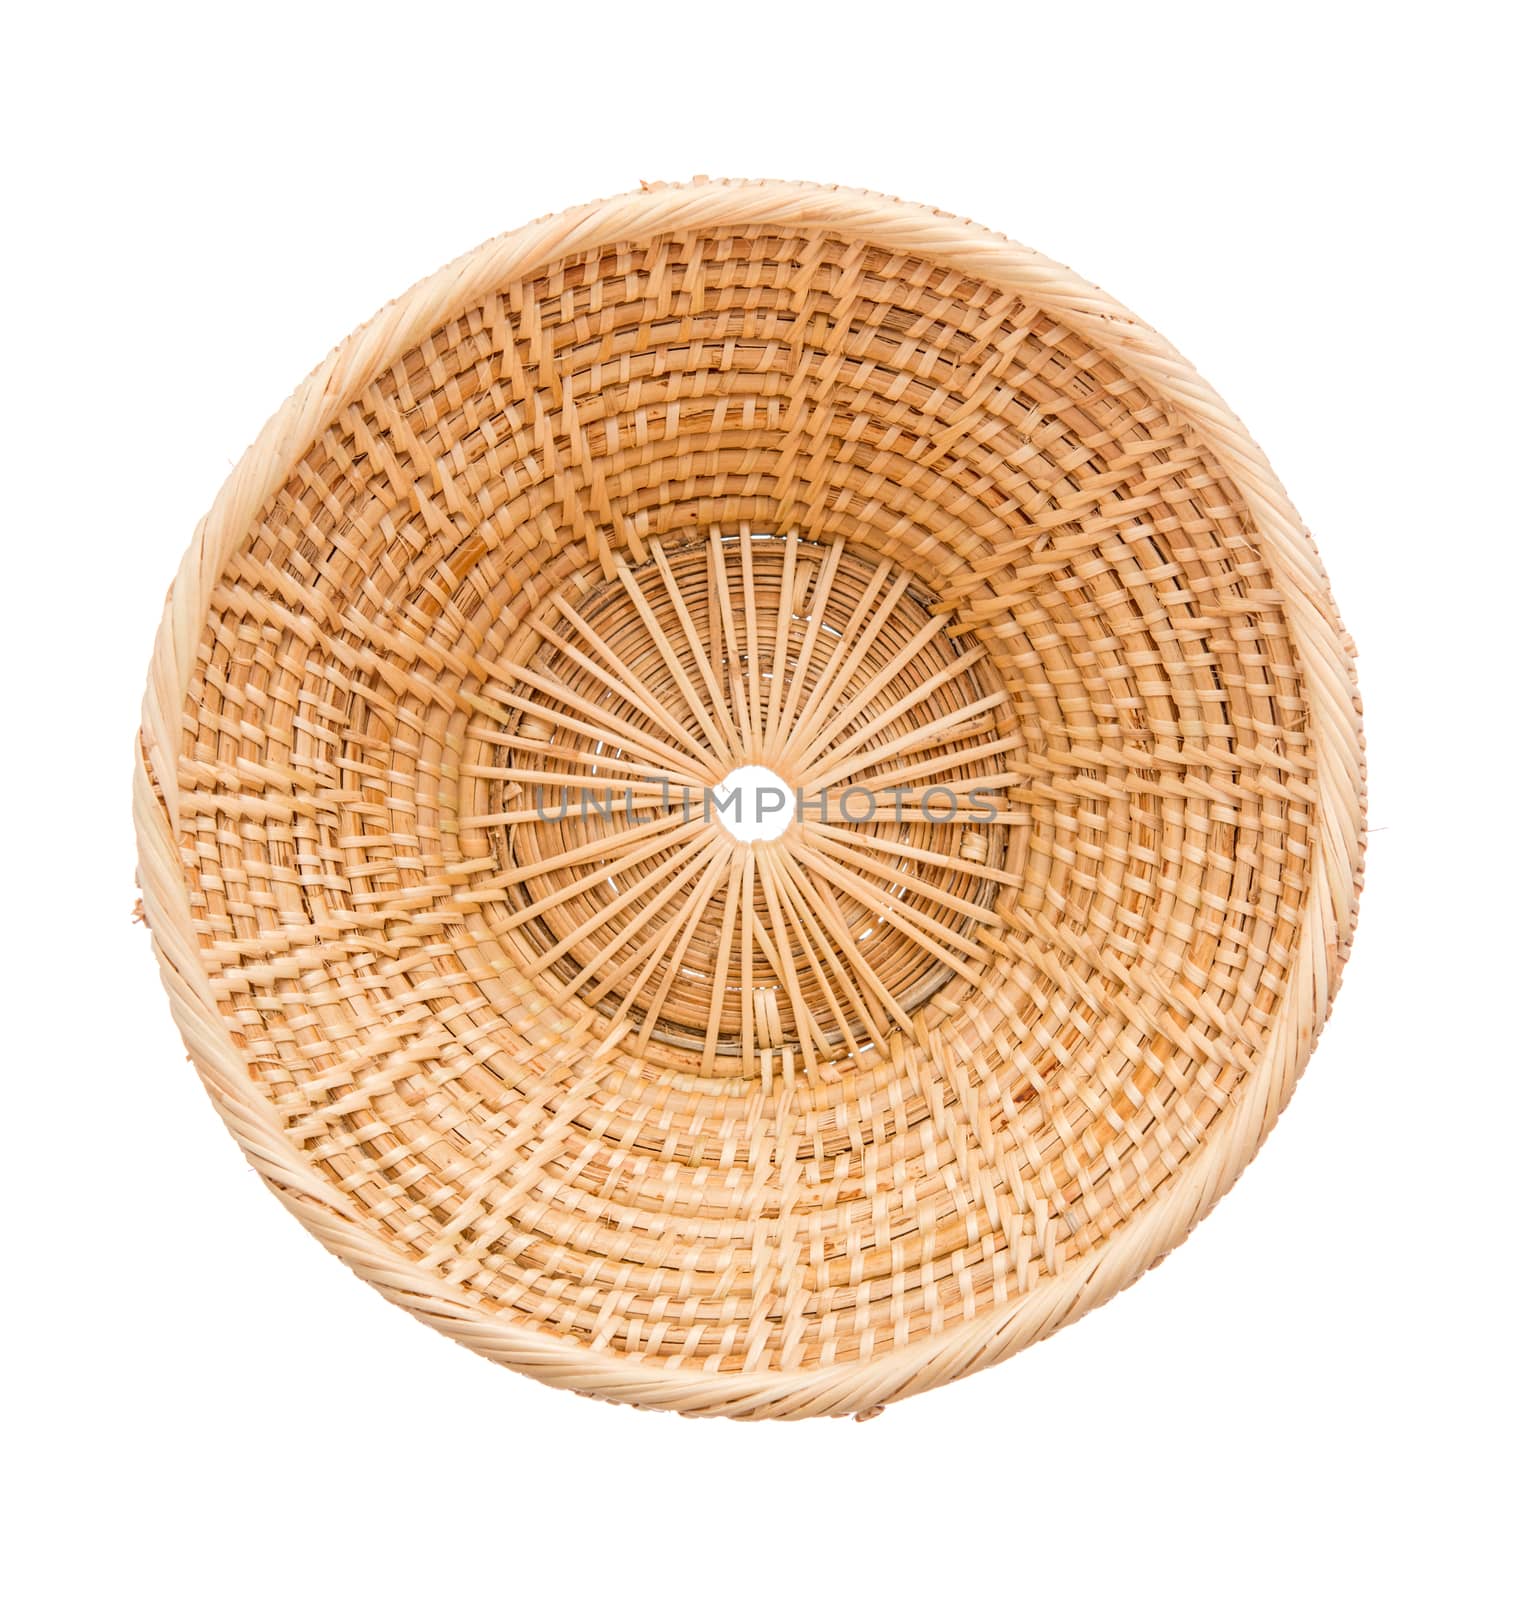 Wood basket wicker wooden in handmade top view by Sorapop